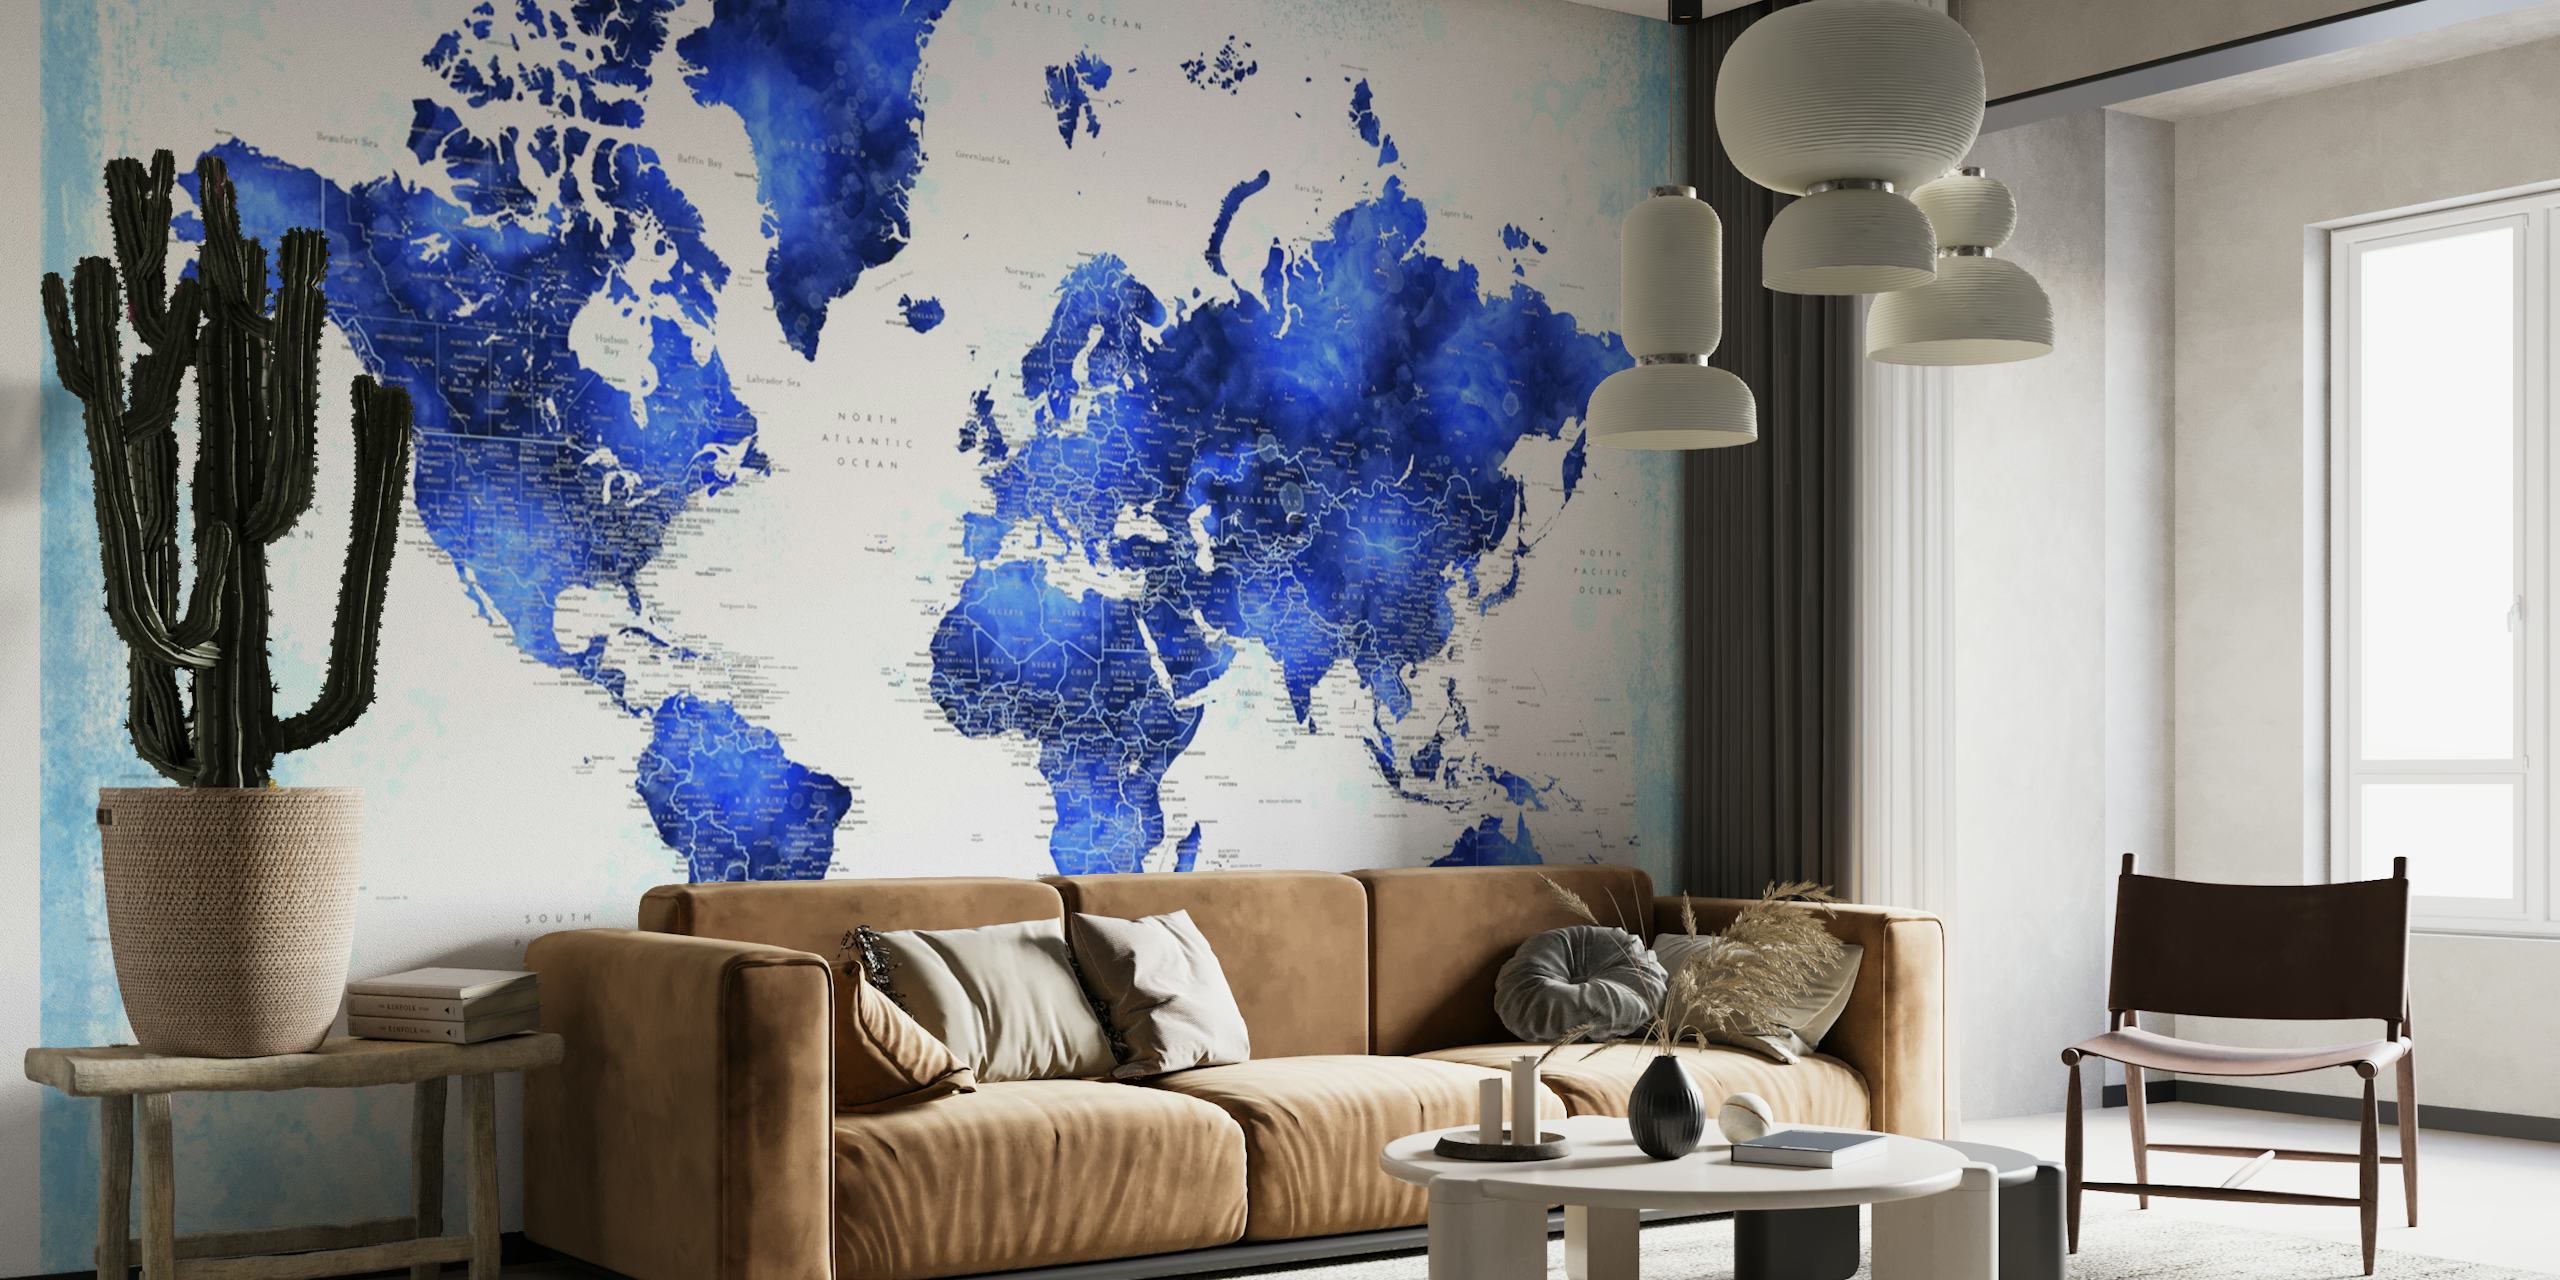 Detailed World Map Georgino wall mural in blue hues